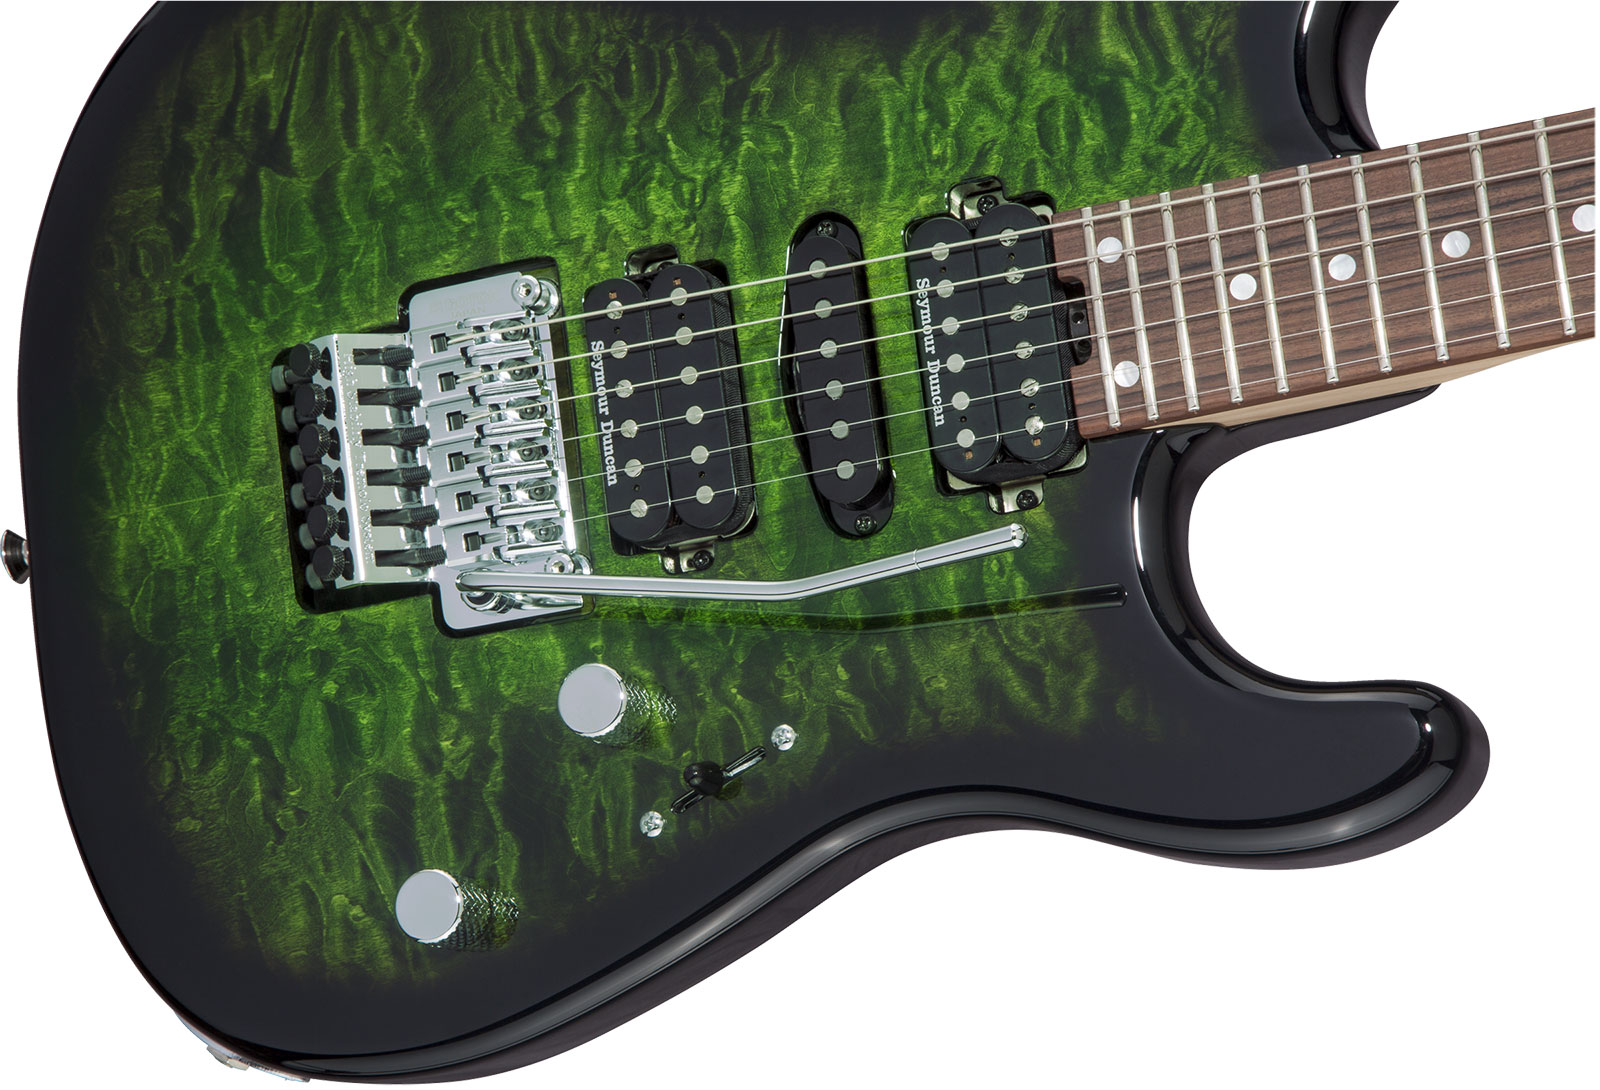 Charvel San Dimas Style 1 Hsh Qm Mj Jap Hsh Seymour Duncan Fr Pf - Transparent Green Burst - Str shape electric guitar - Variation 2